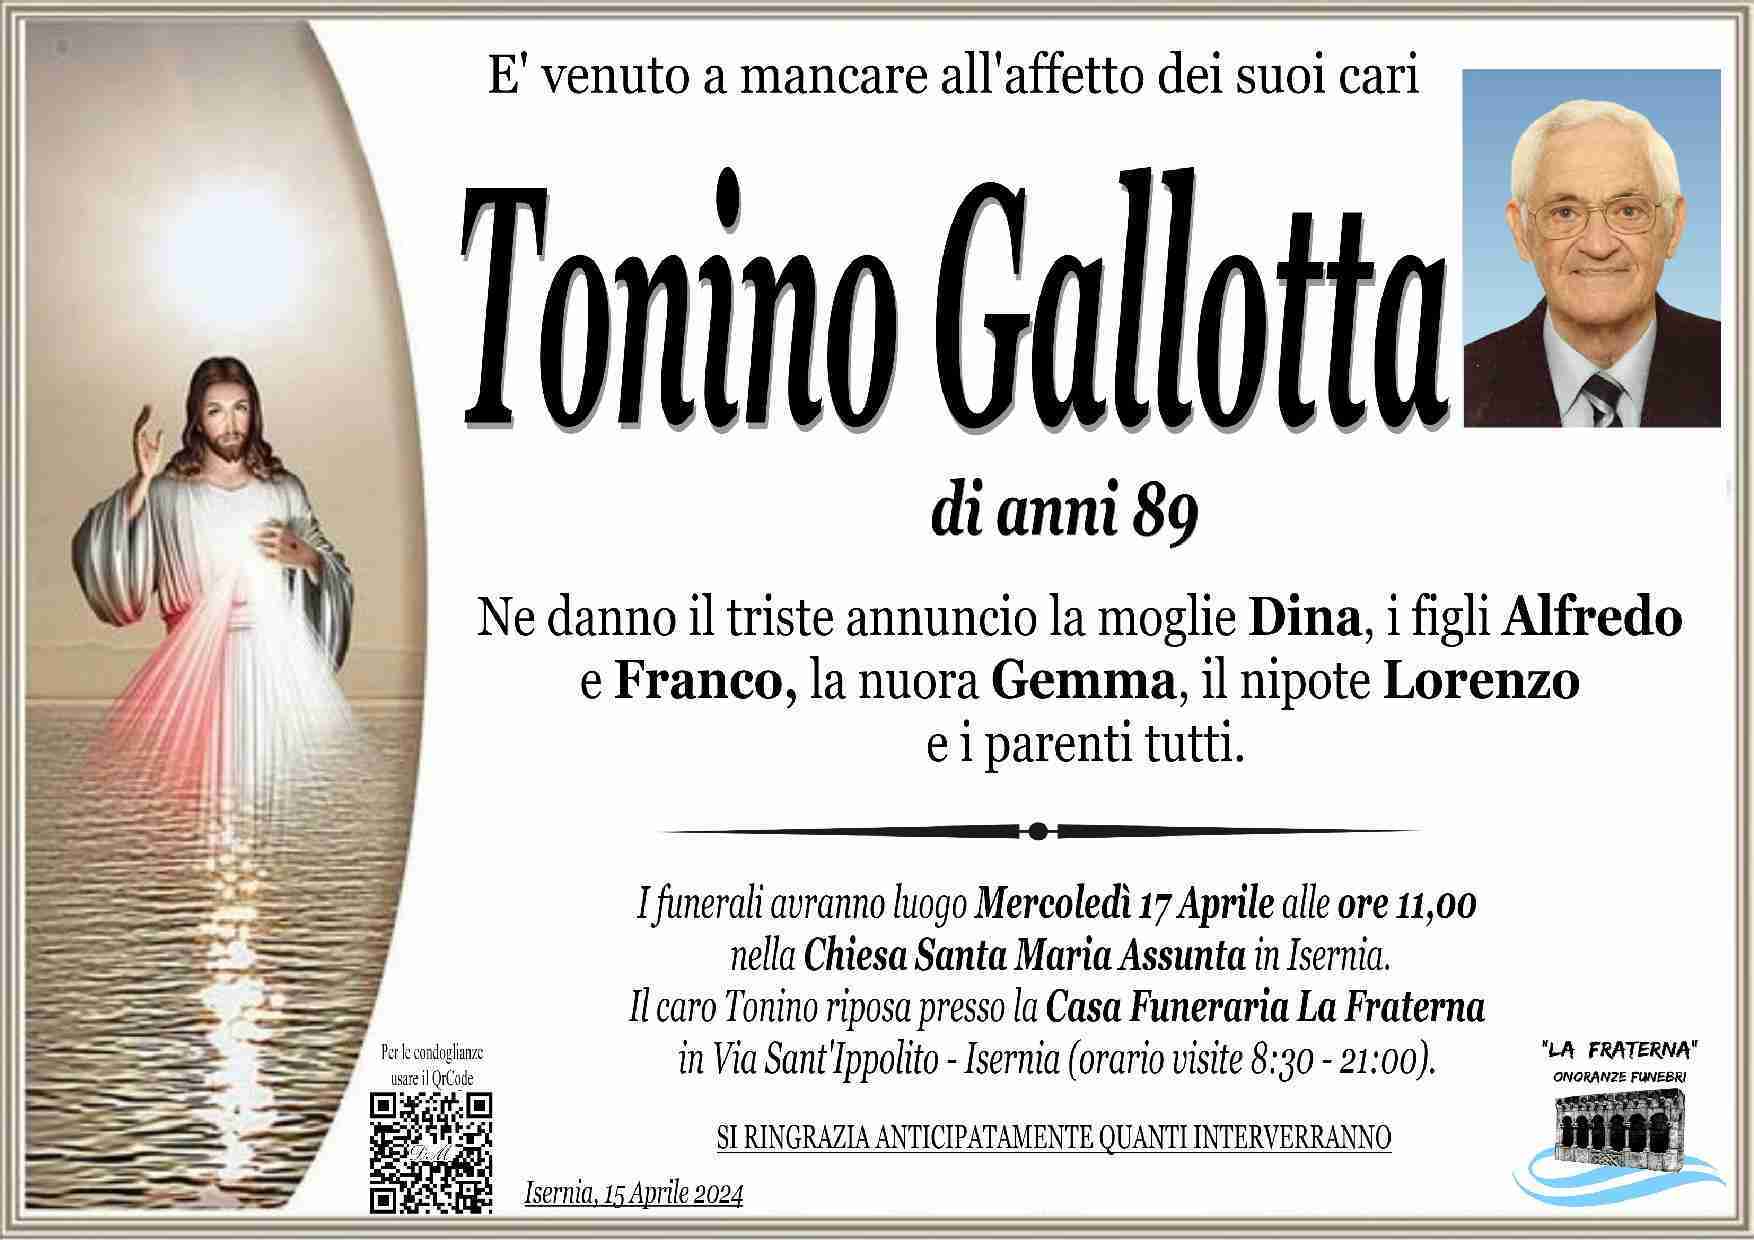 Tonino Gallotta